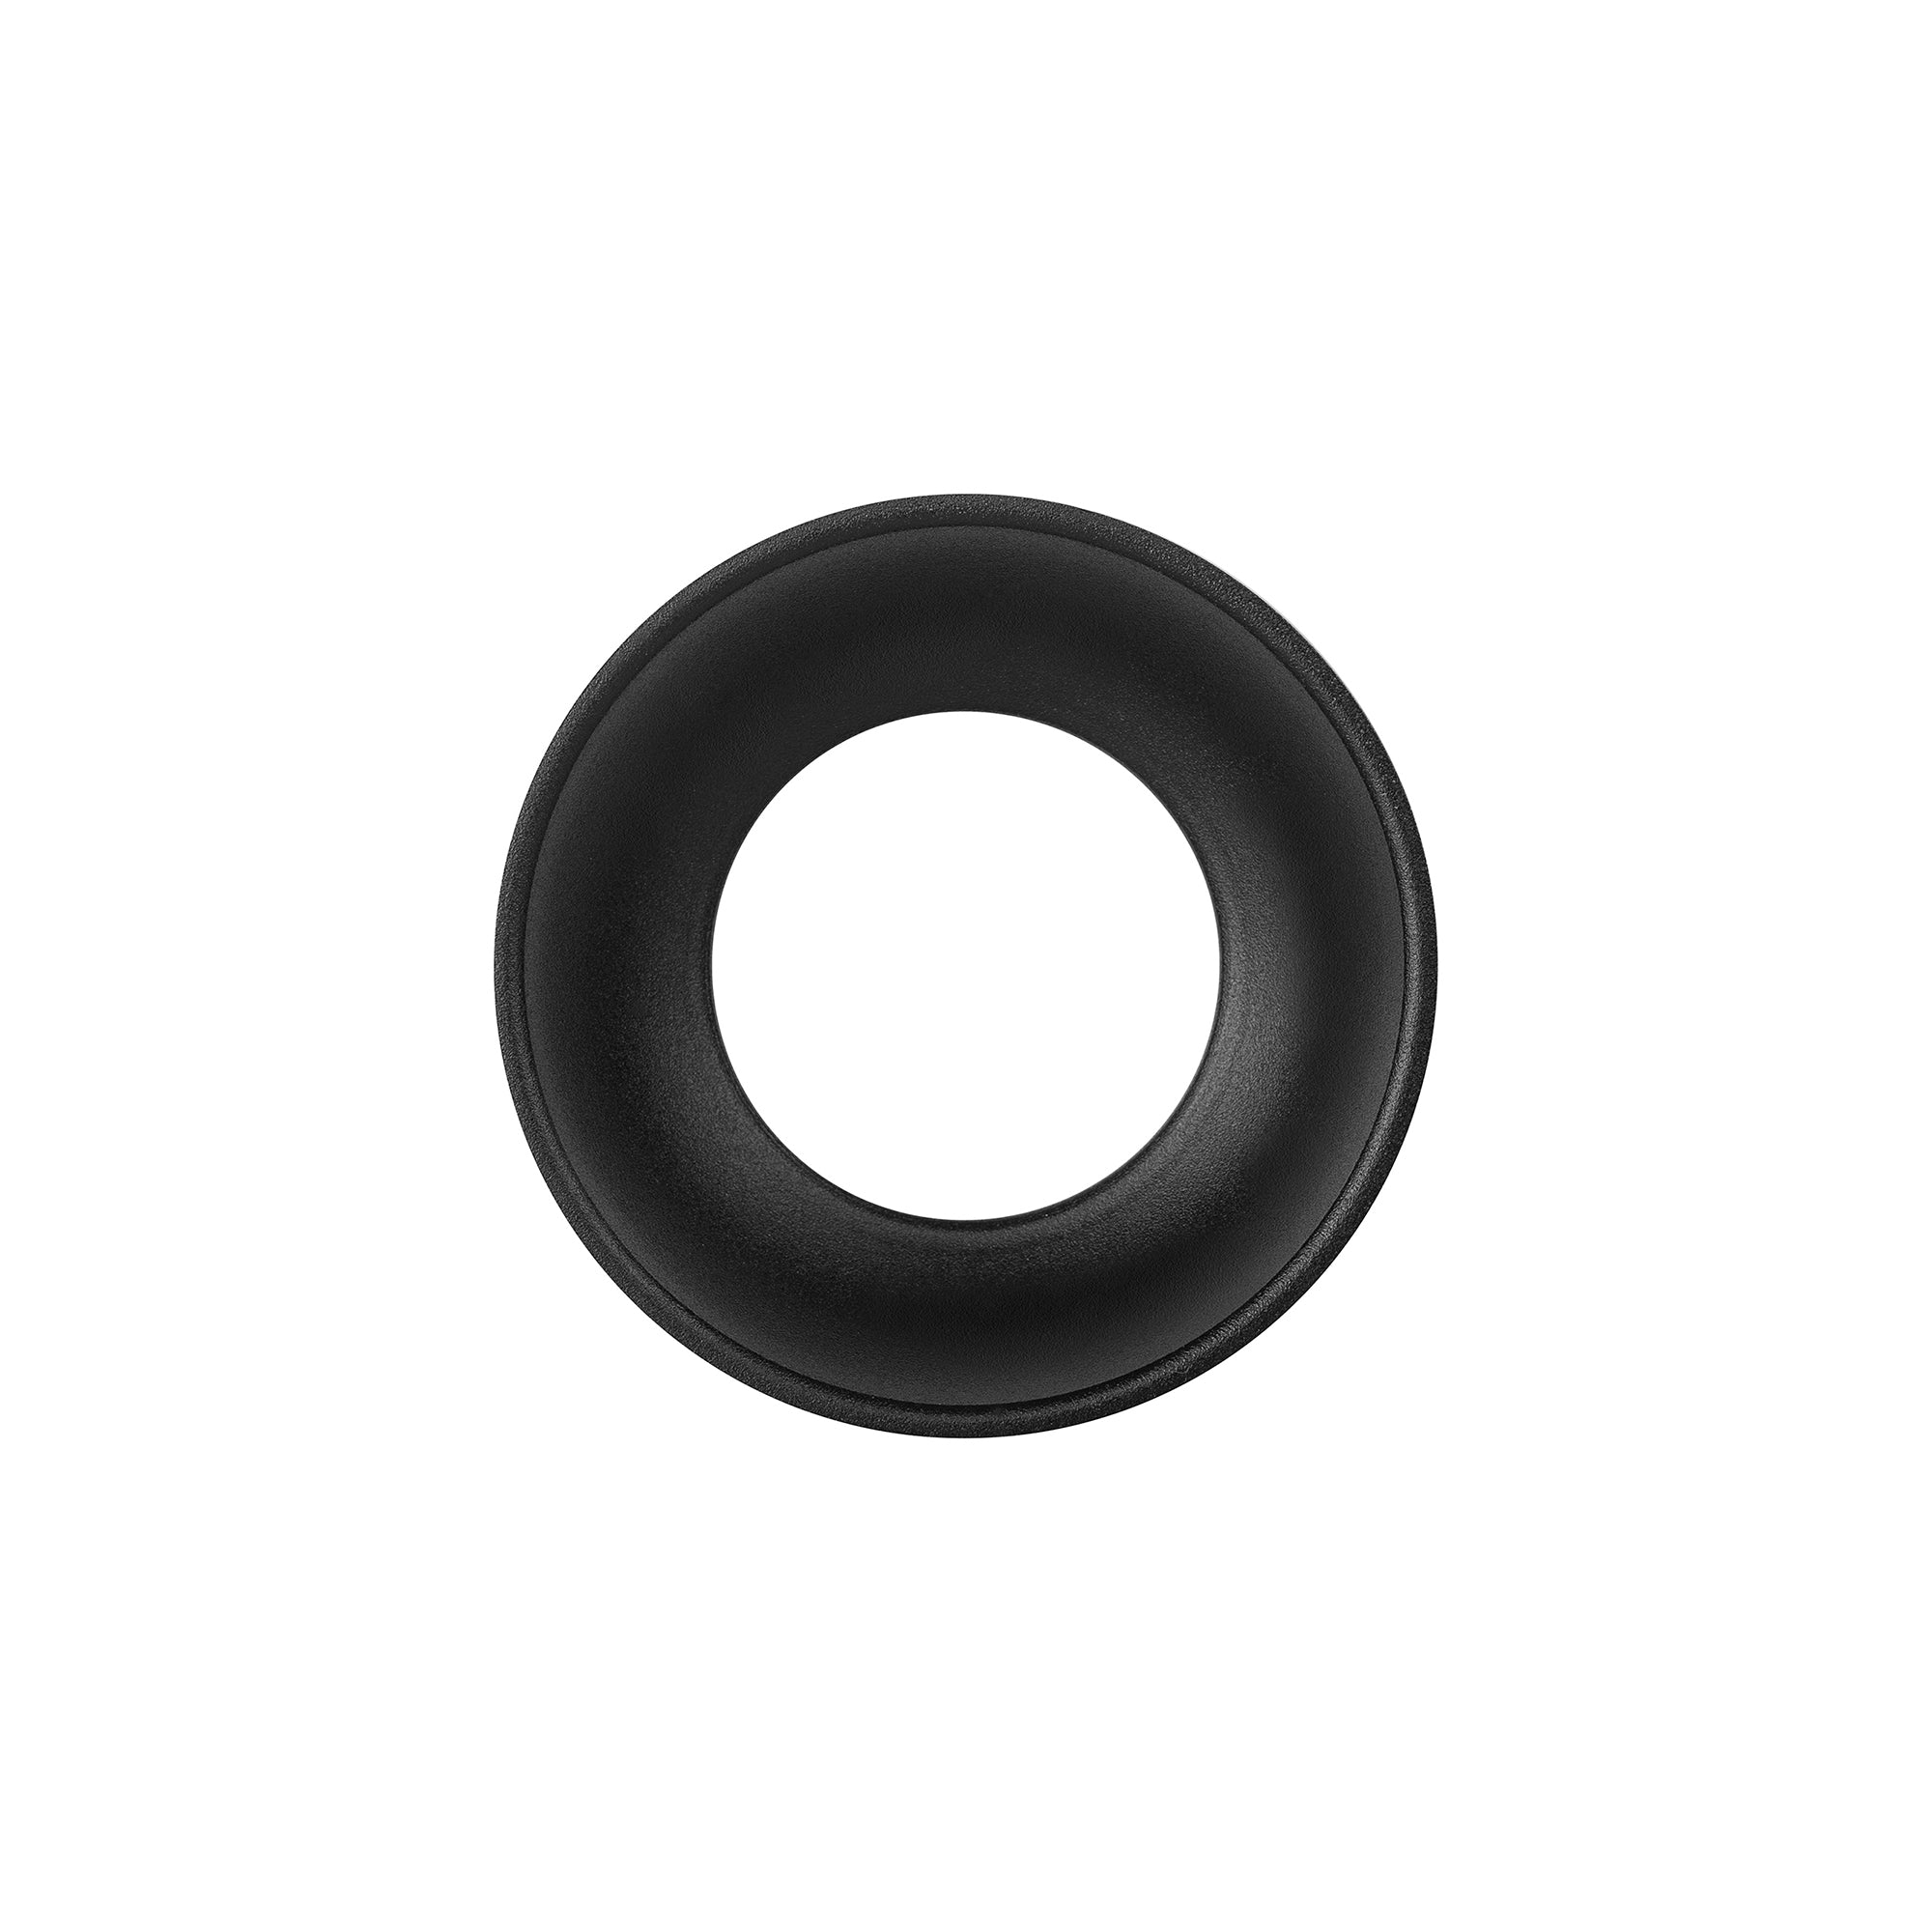 HV5841-BR - Black Inner Ring to Suit HV5841 7w Surface Mounted LED Downlight